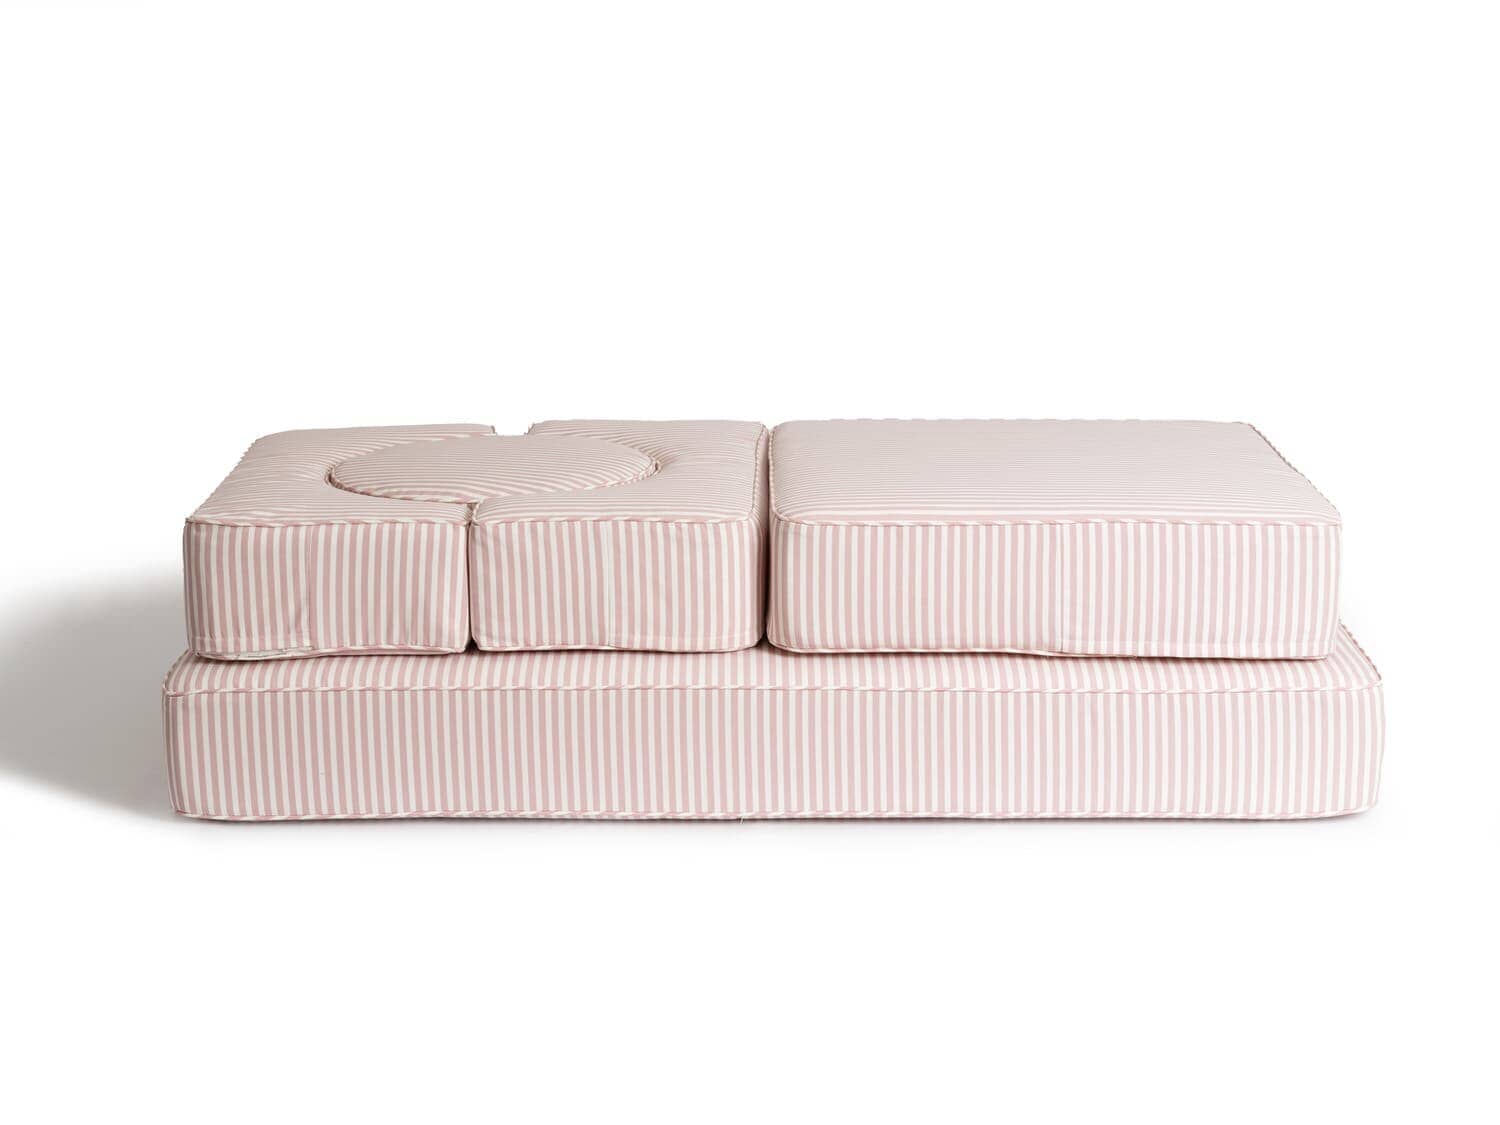 Studio image of pink modular pillow stack